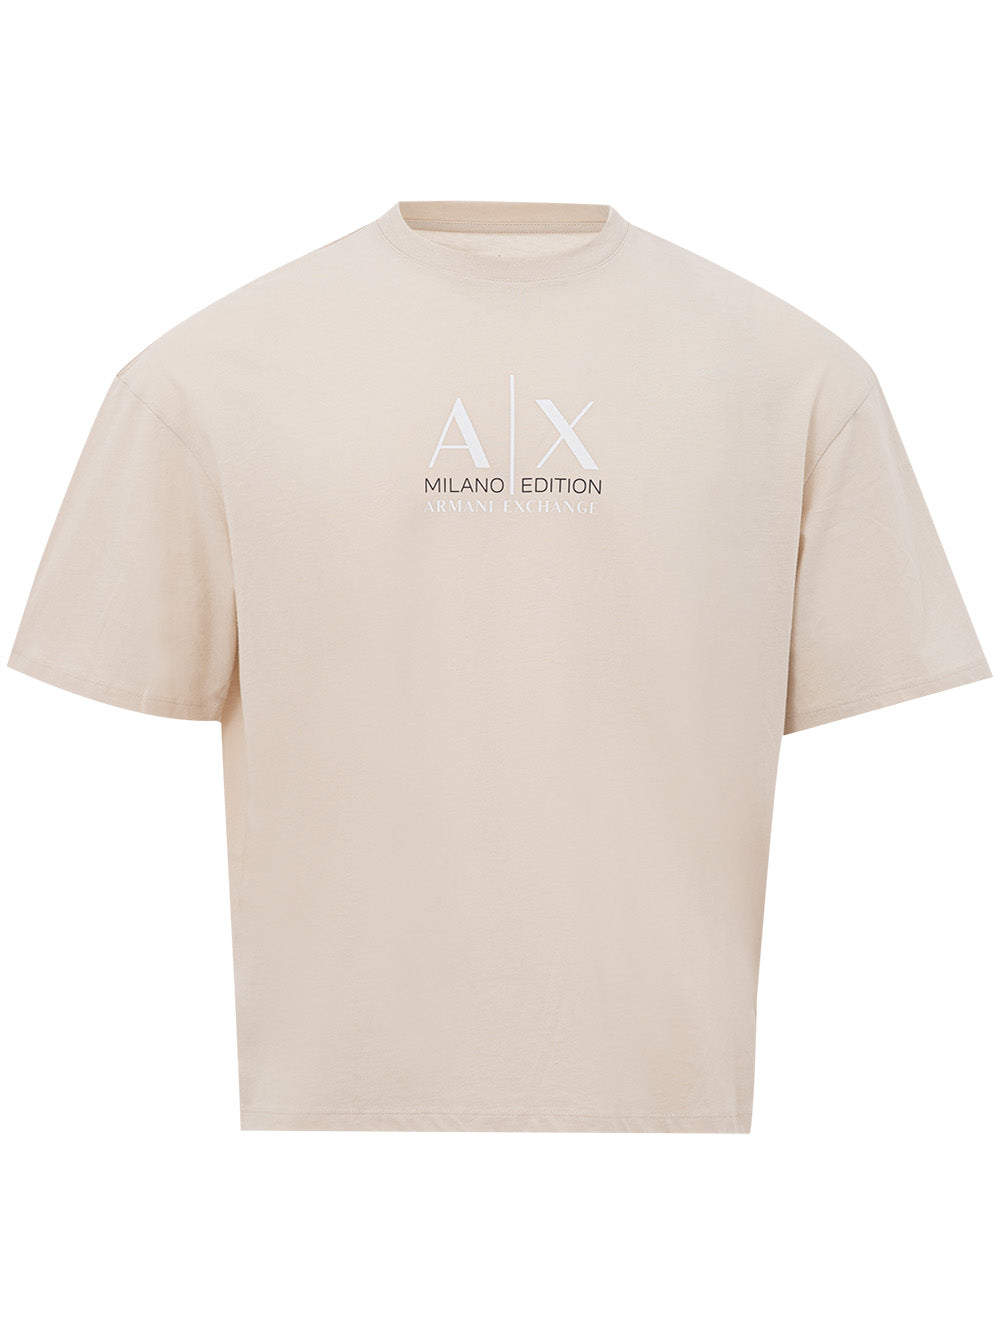 T-Shirt Beige con Logo 'Milano Edition' Armani Exchange